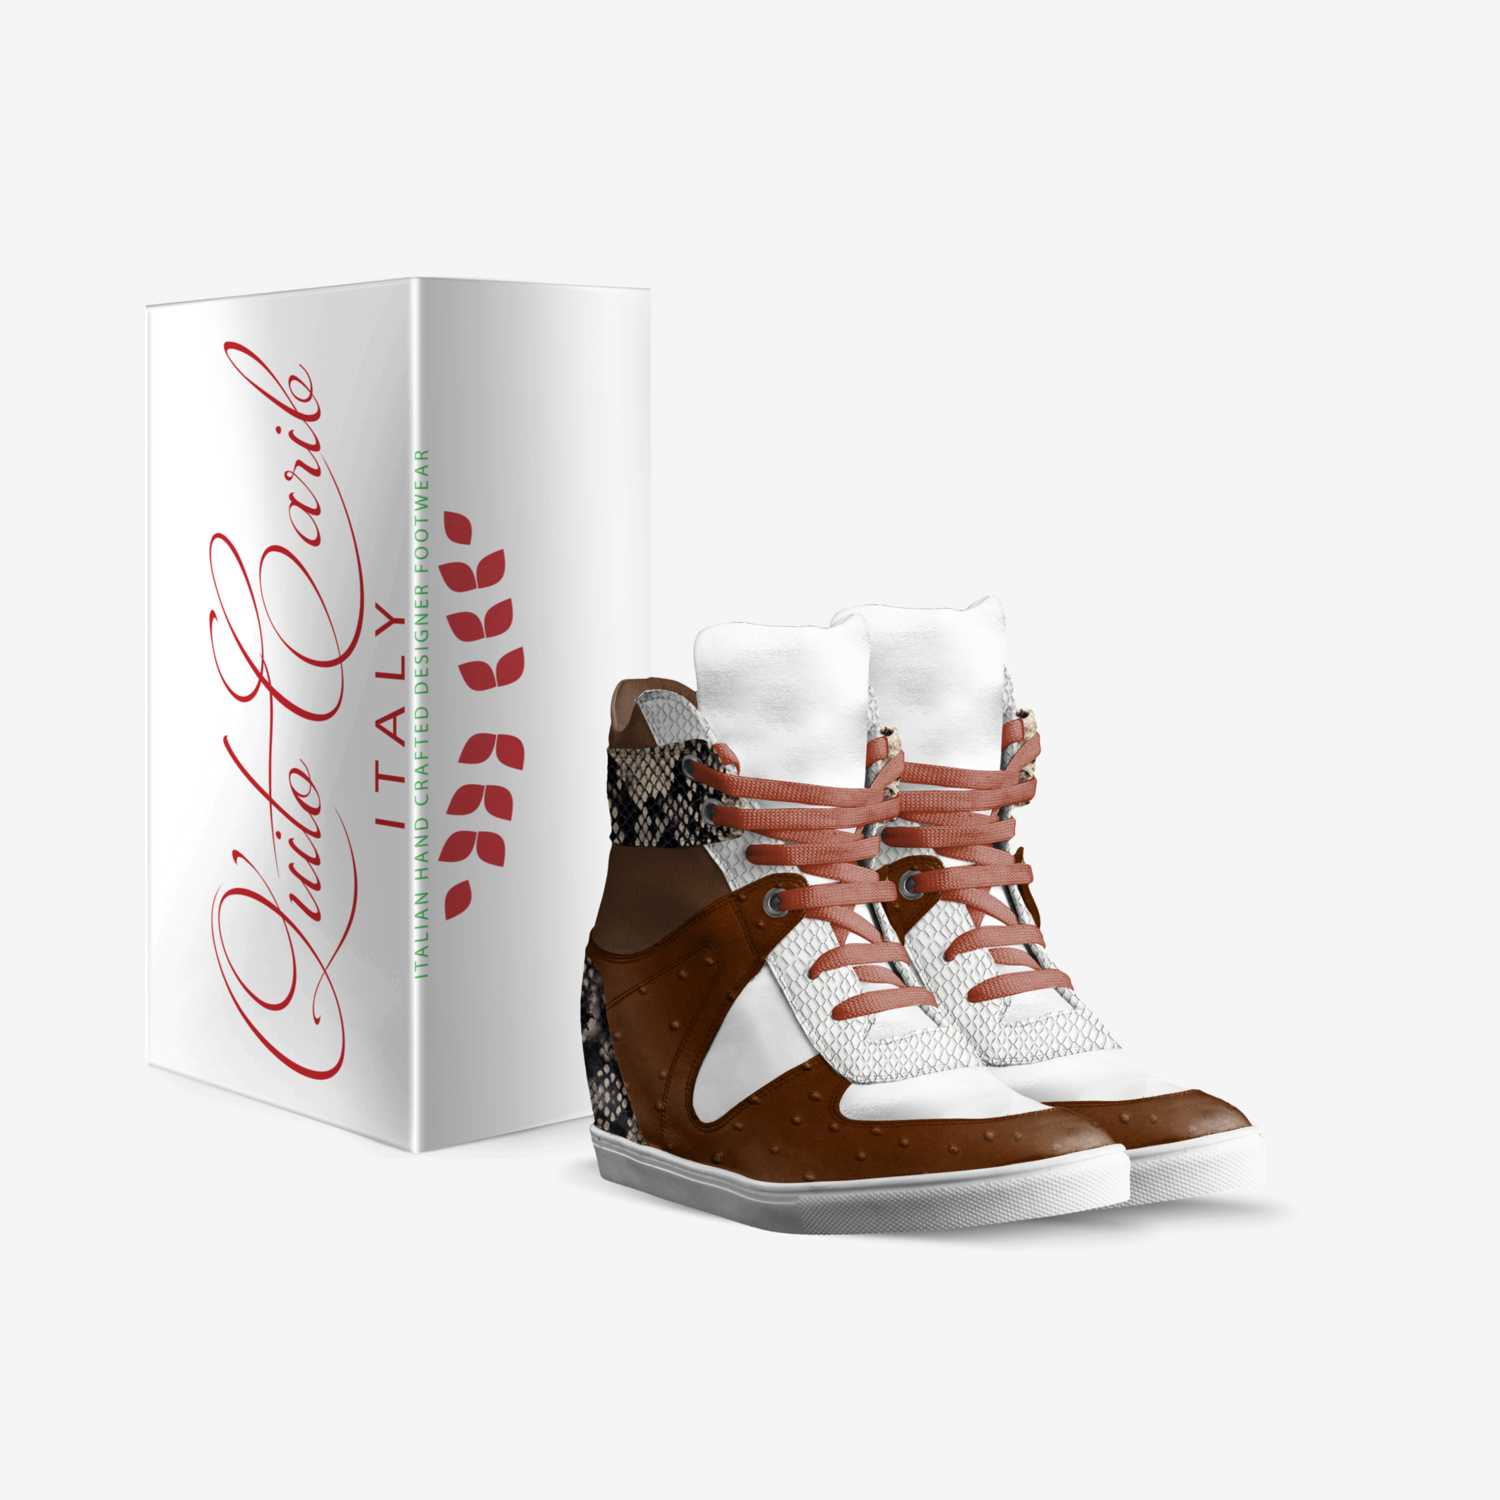 QUITO CARIB custom made in Italy shoes by M Ramirez Deheywood | Box view